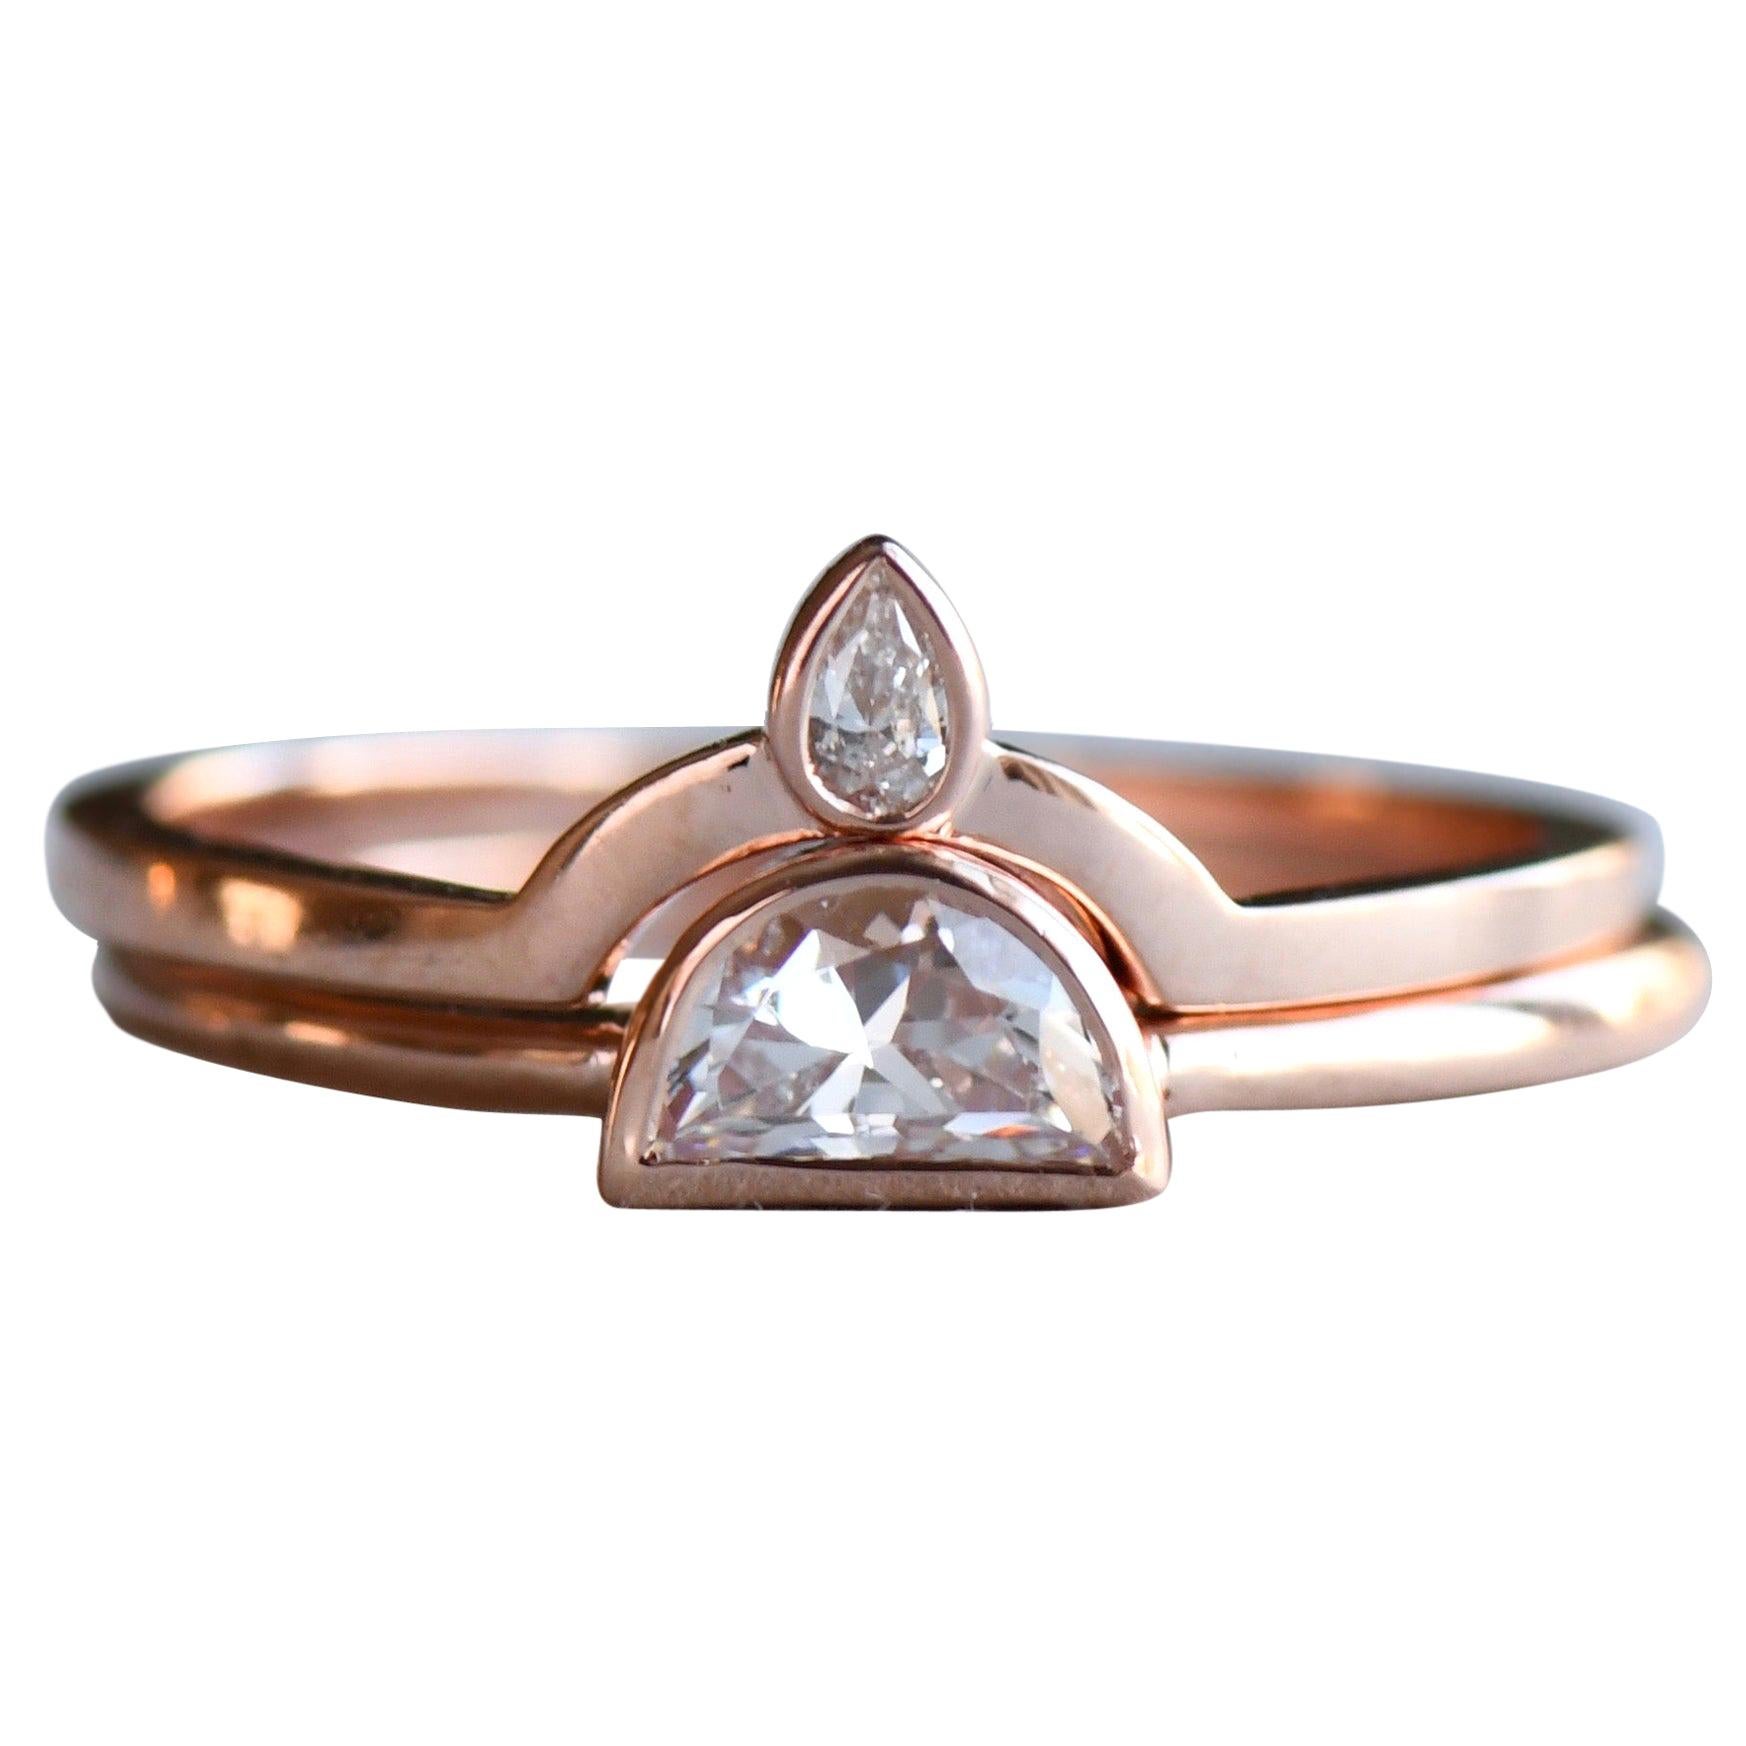 For Sale:  0.25 Carat Half Moon Diamond Engagement Ring Set